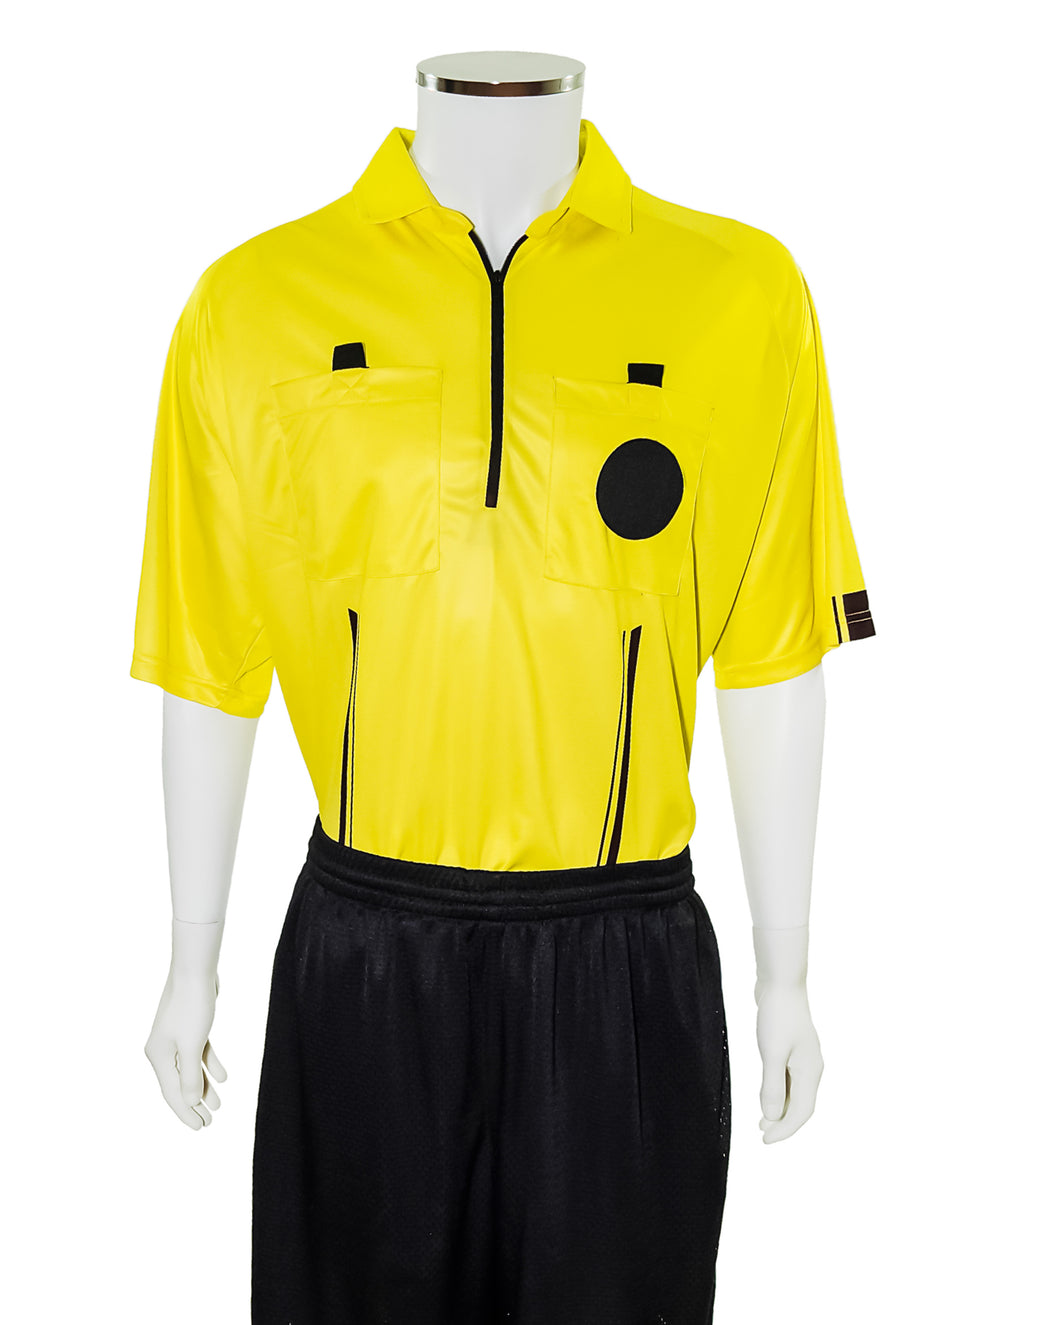 ussf pro soccer referee jerseys